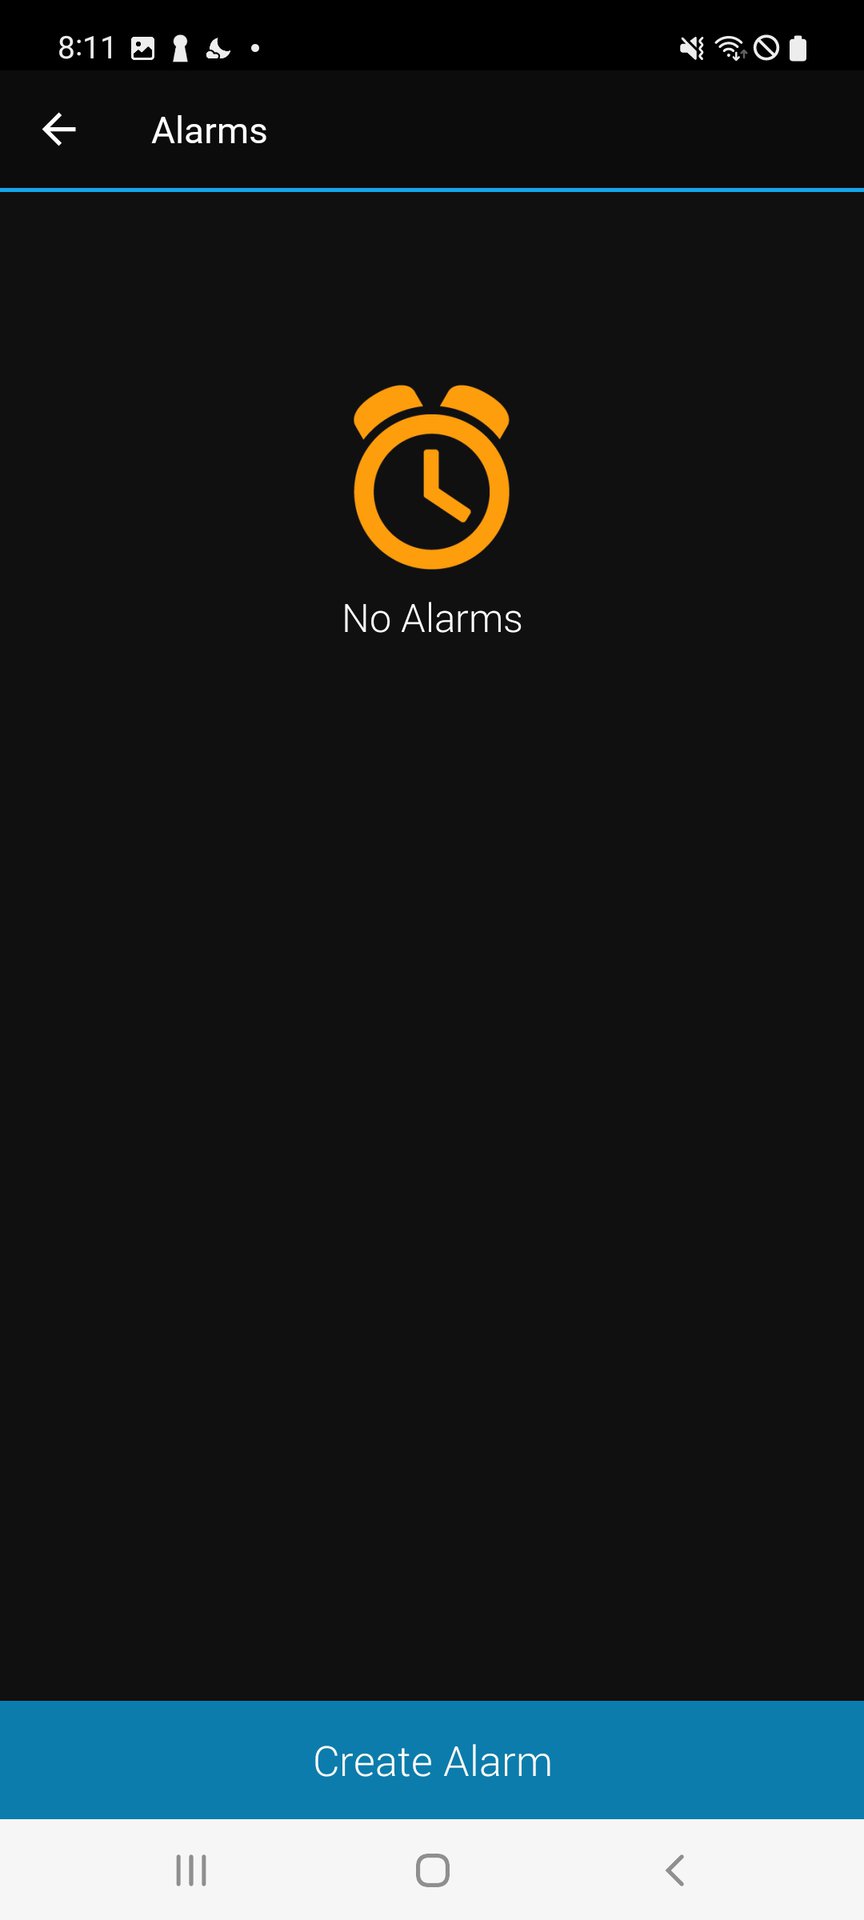 A screenshot of the Garmin Connect app displays a user's alarm menu as well as the Create Alarm option.